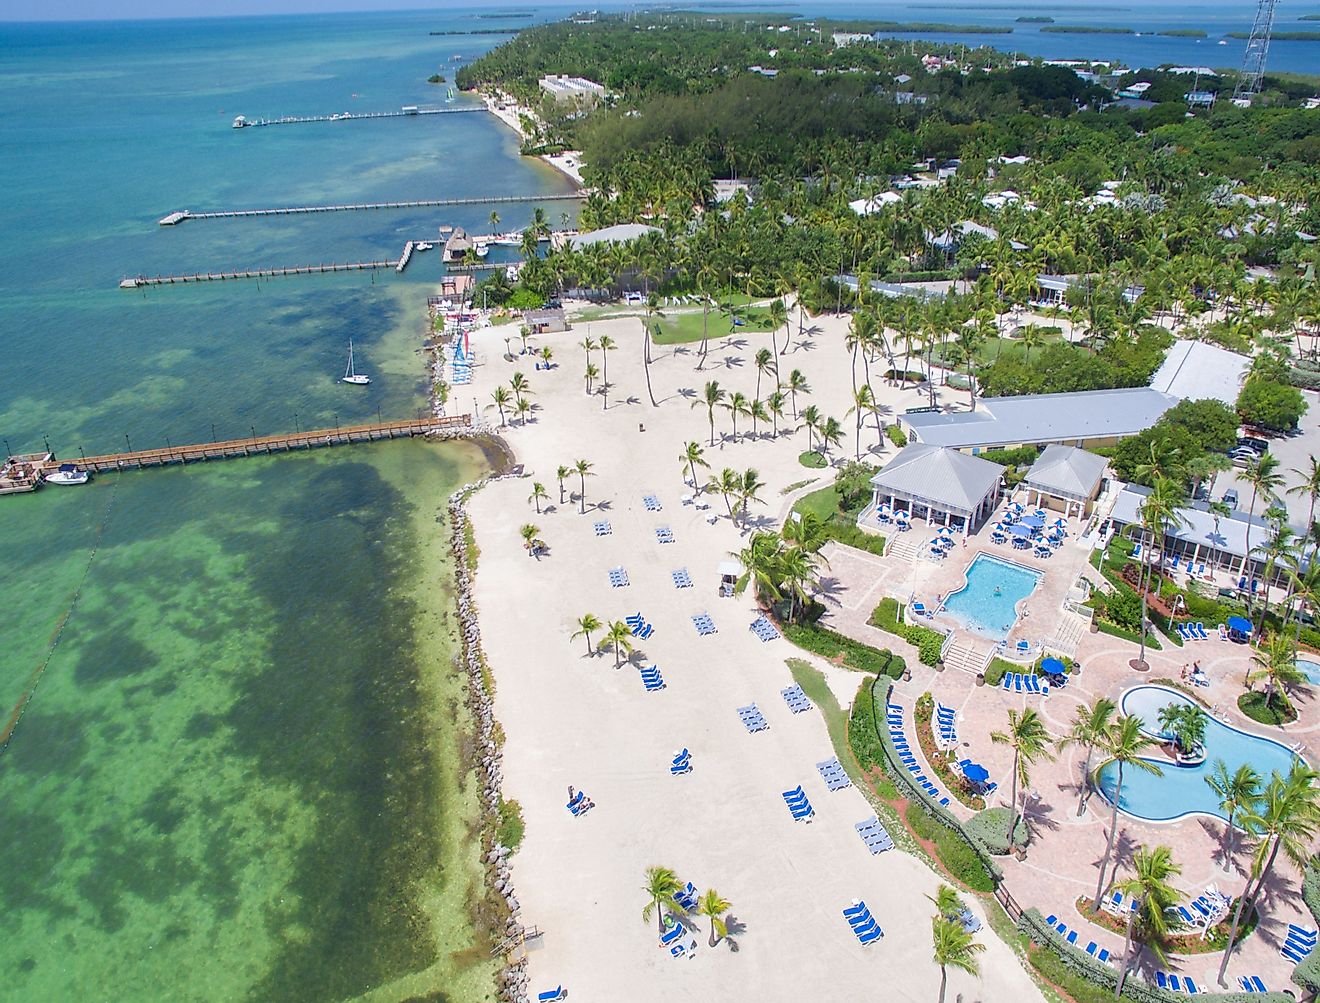 Aerial view of tropical paradise Island, Islamorada, Florida Keys. Image credit Mia2you via shutterstock